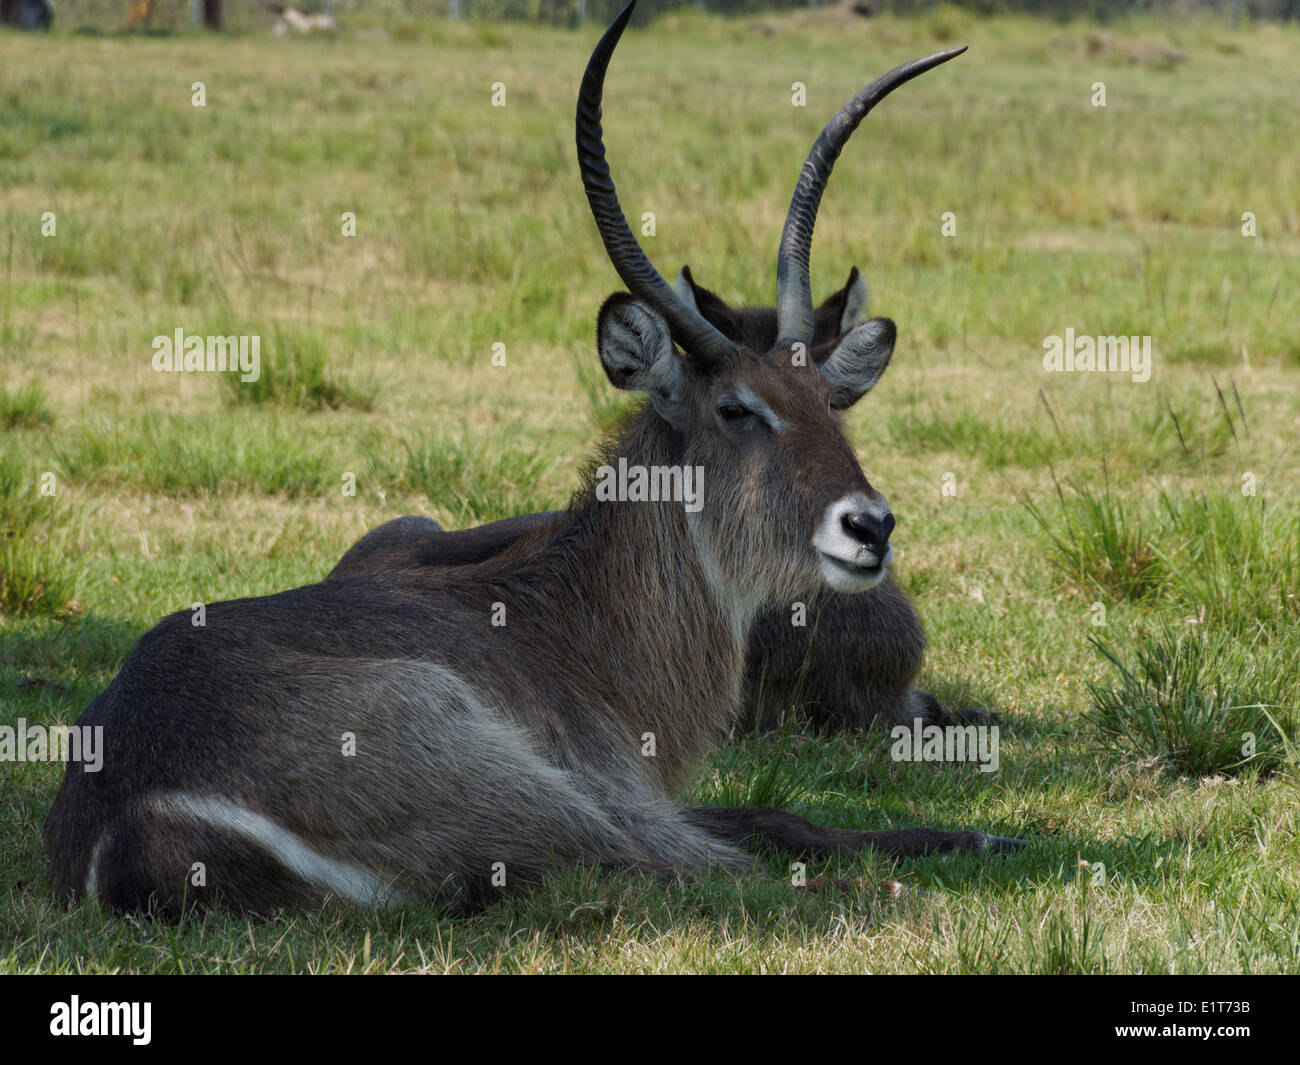 Antilope mâle Waterbuck relaxing on Green grass Banque D'Images